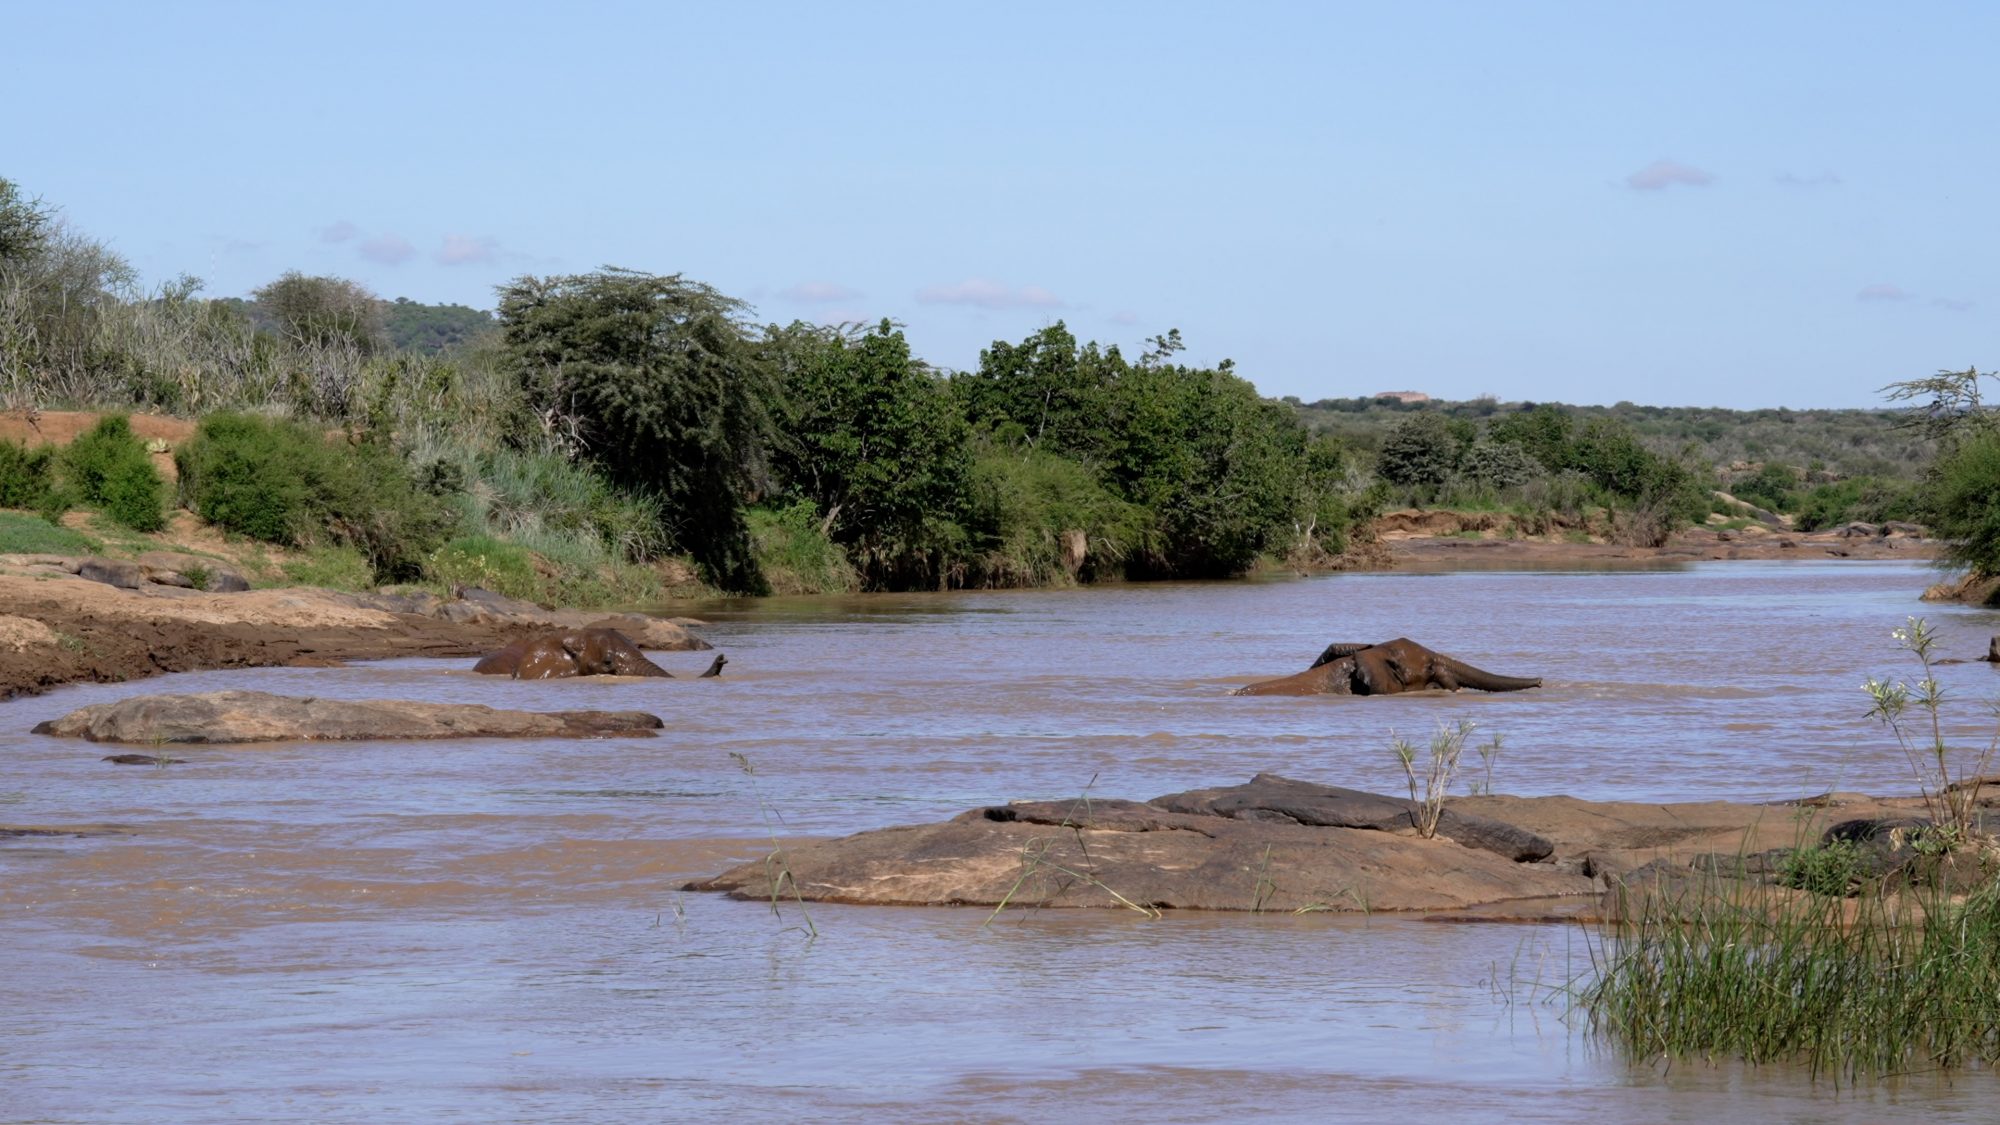 Elephants have fun in the river – Laikipia, Kenya 2023